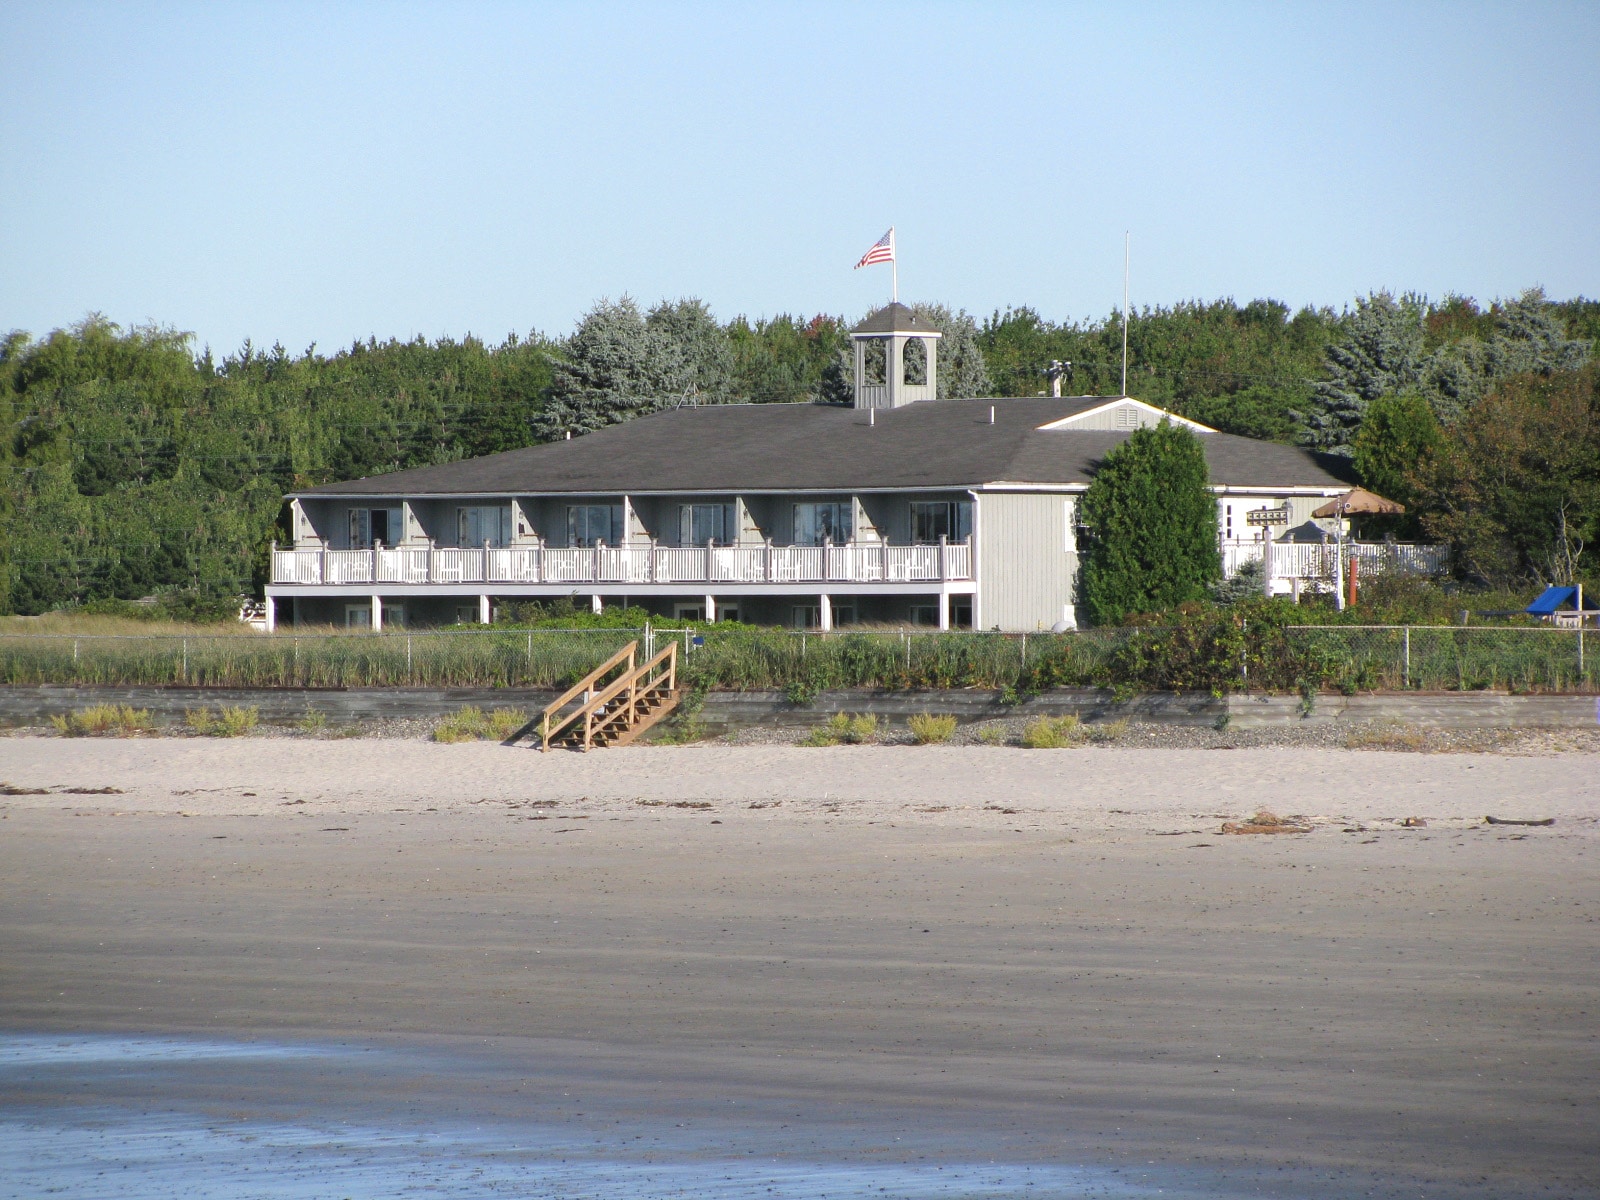 seashore inn and suites